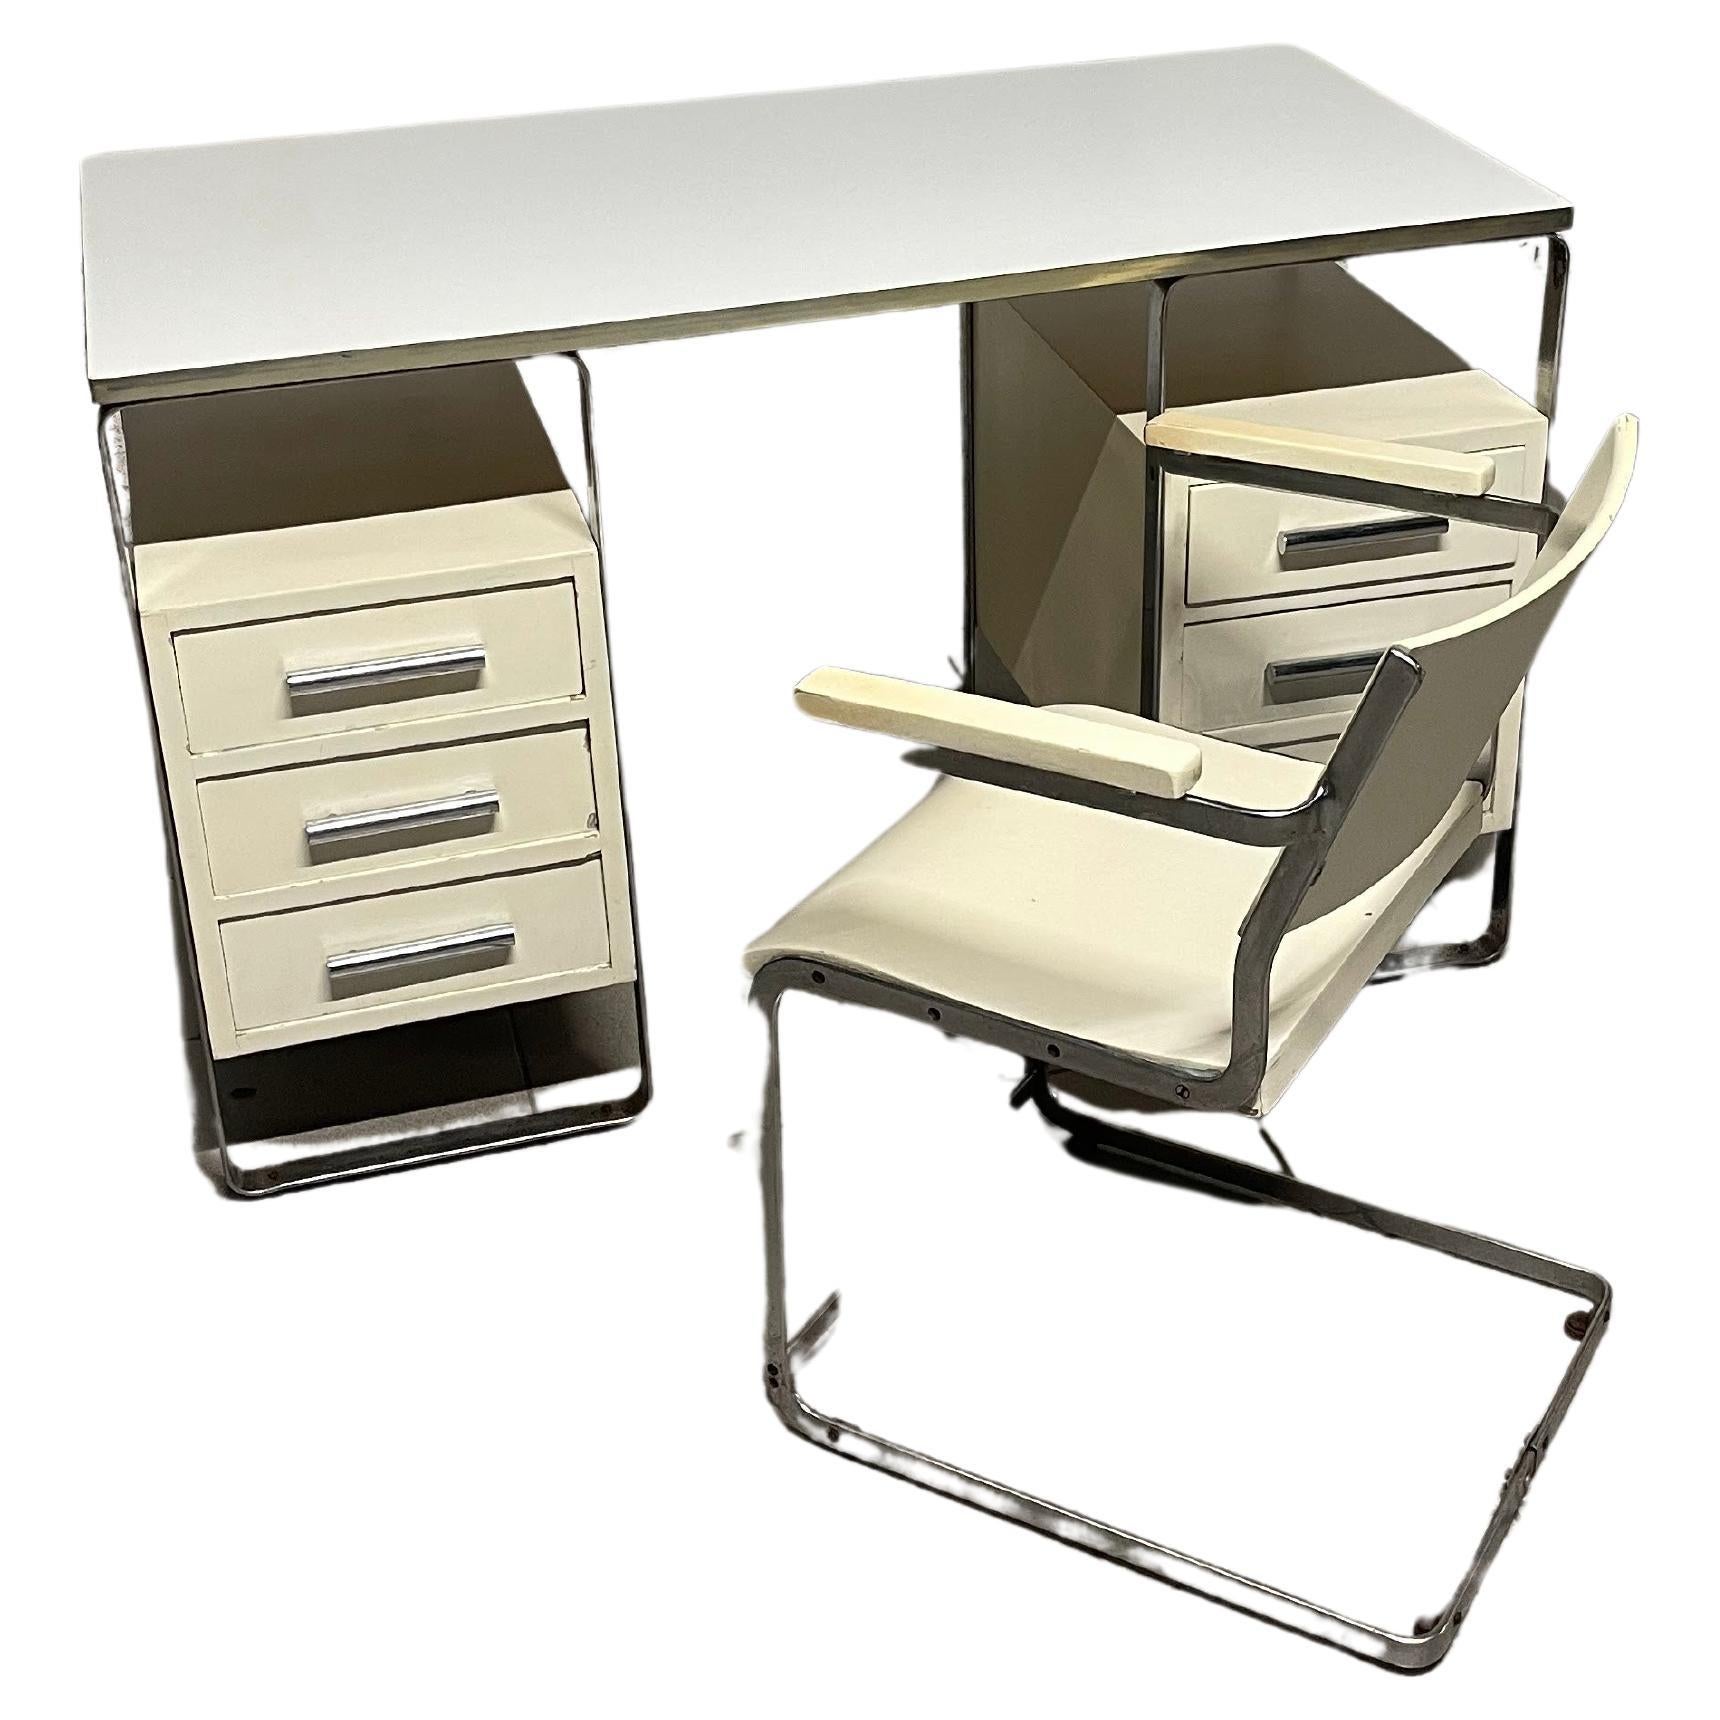 1930s chair desk set belonged to doctor's office